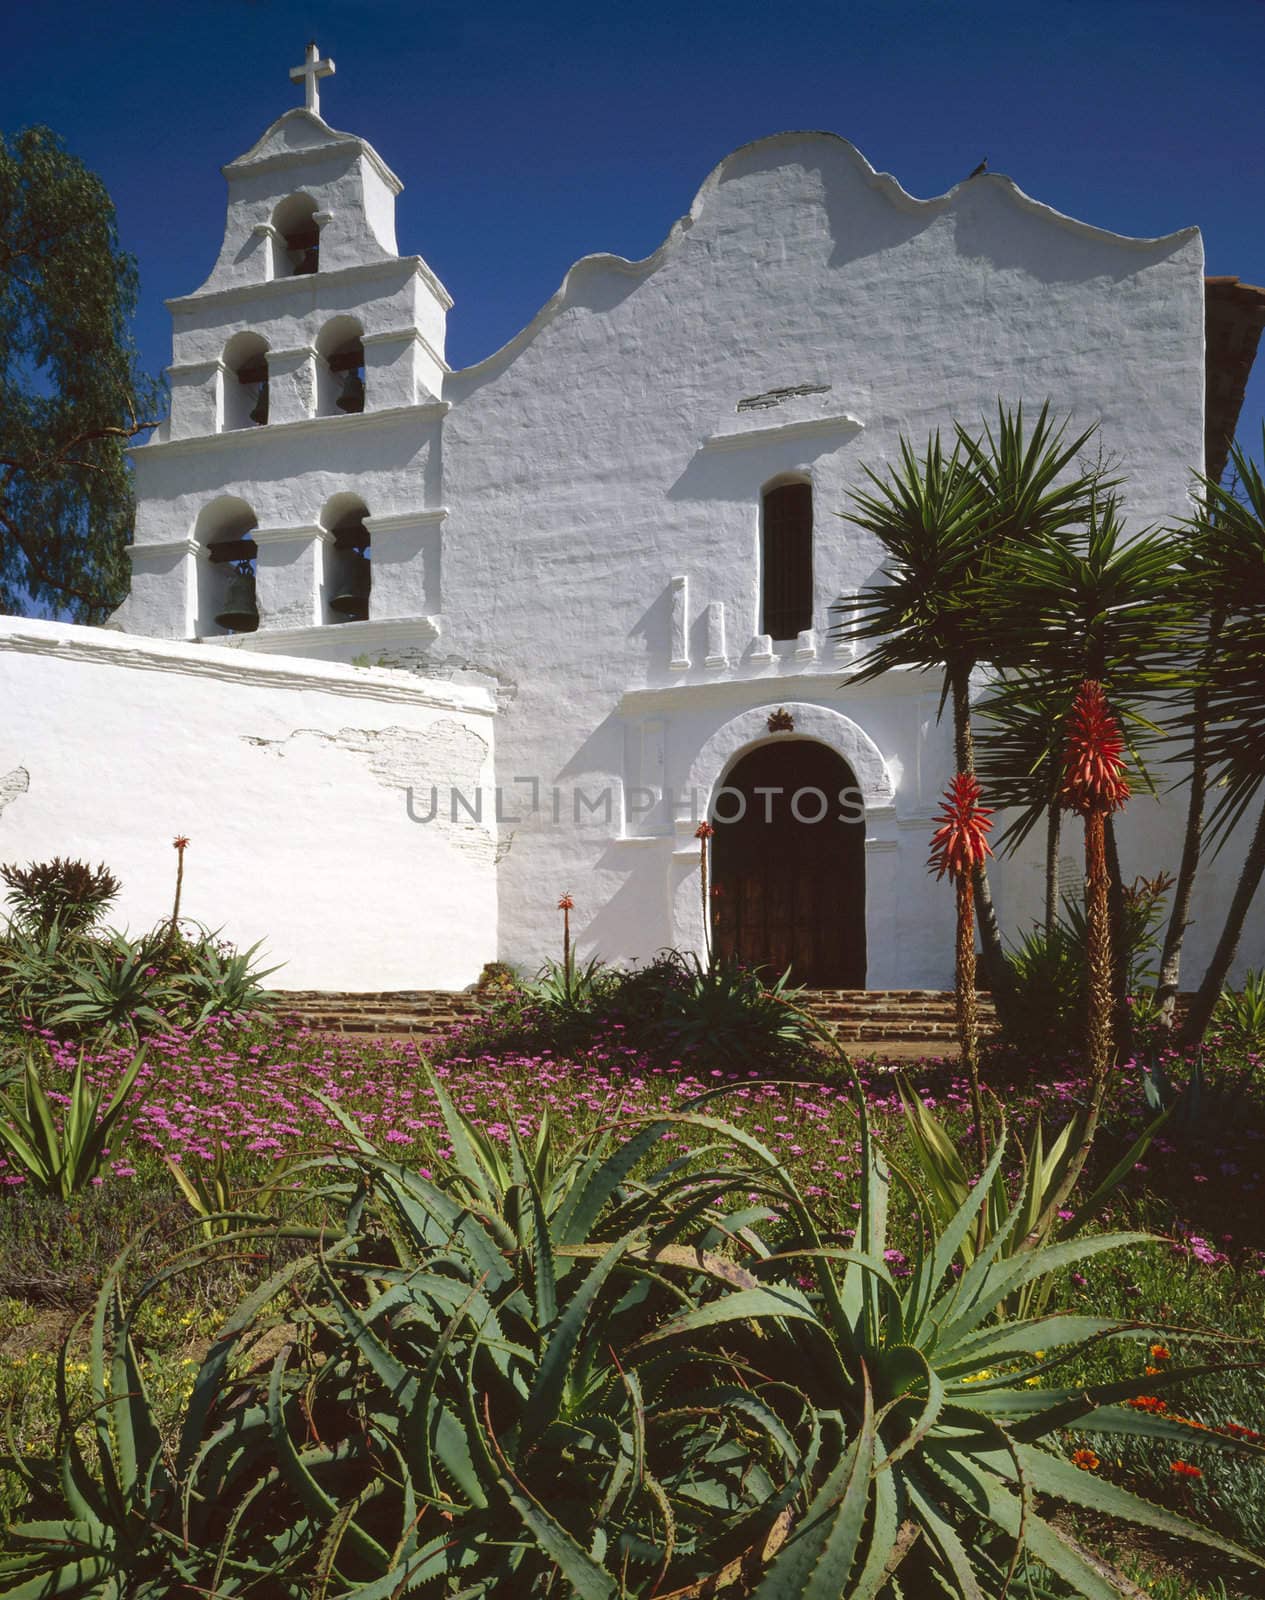 Mission San Diego de Alcala,San Diego, California, est.1769